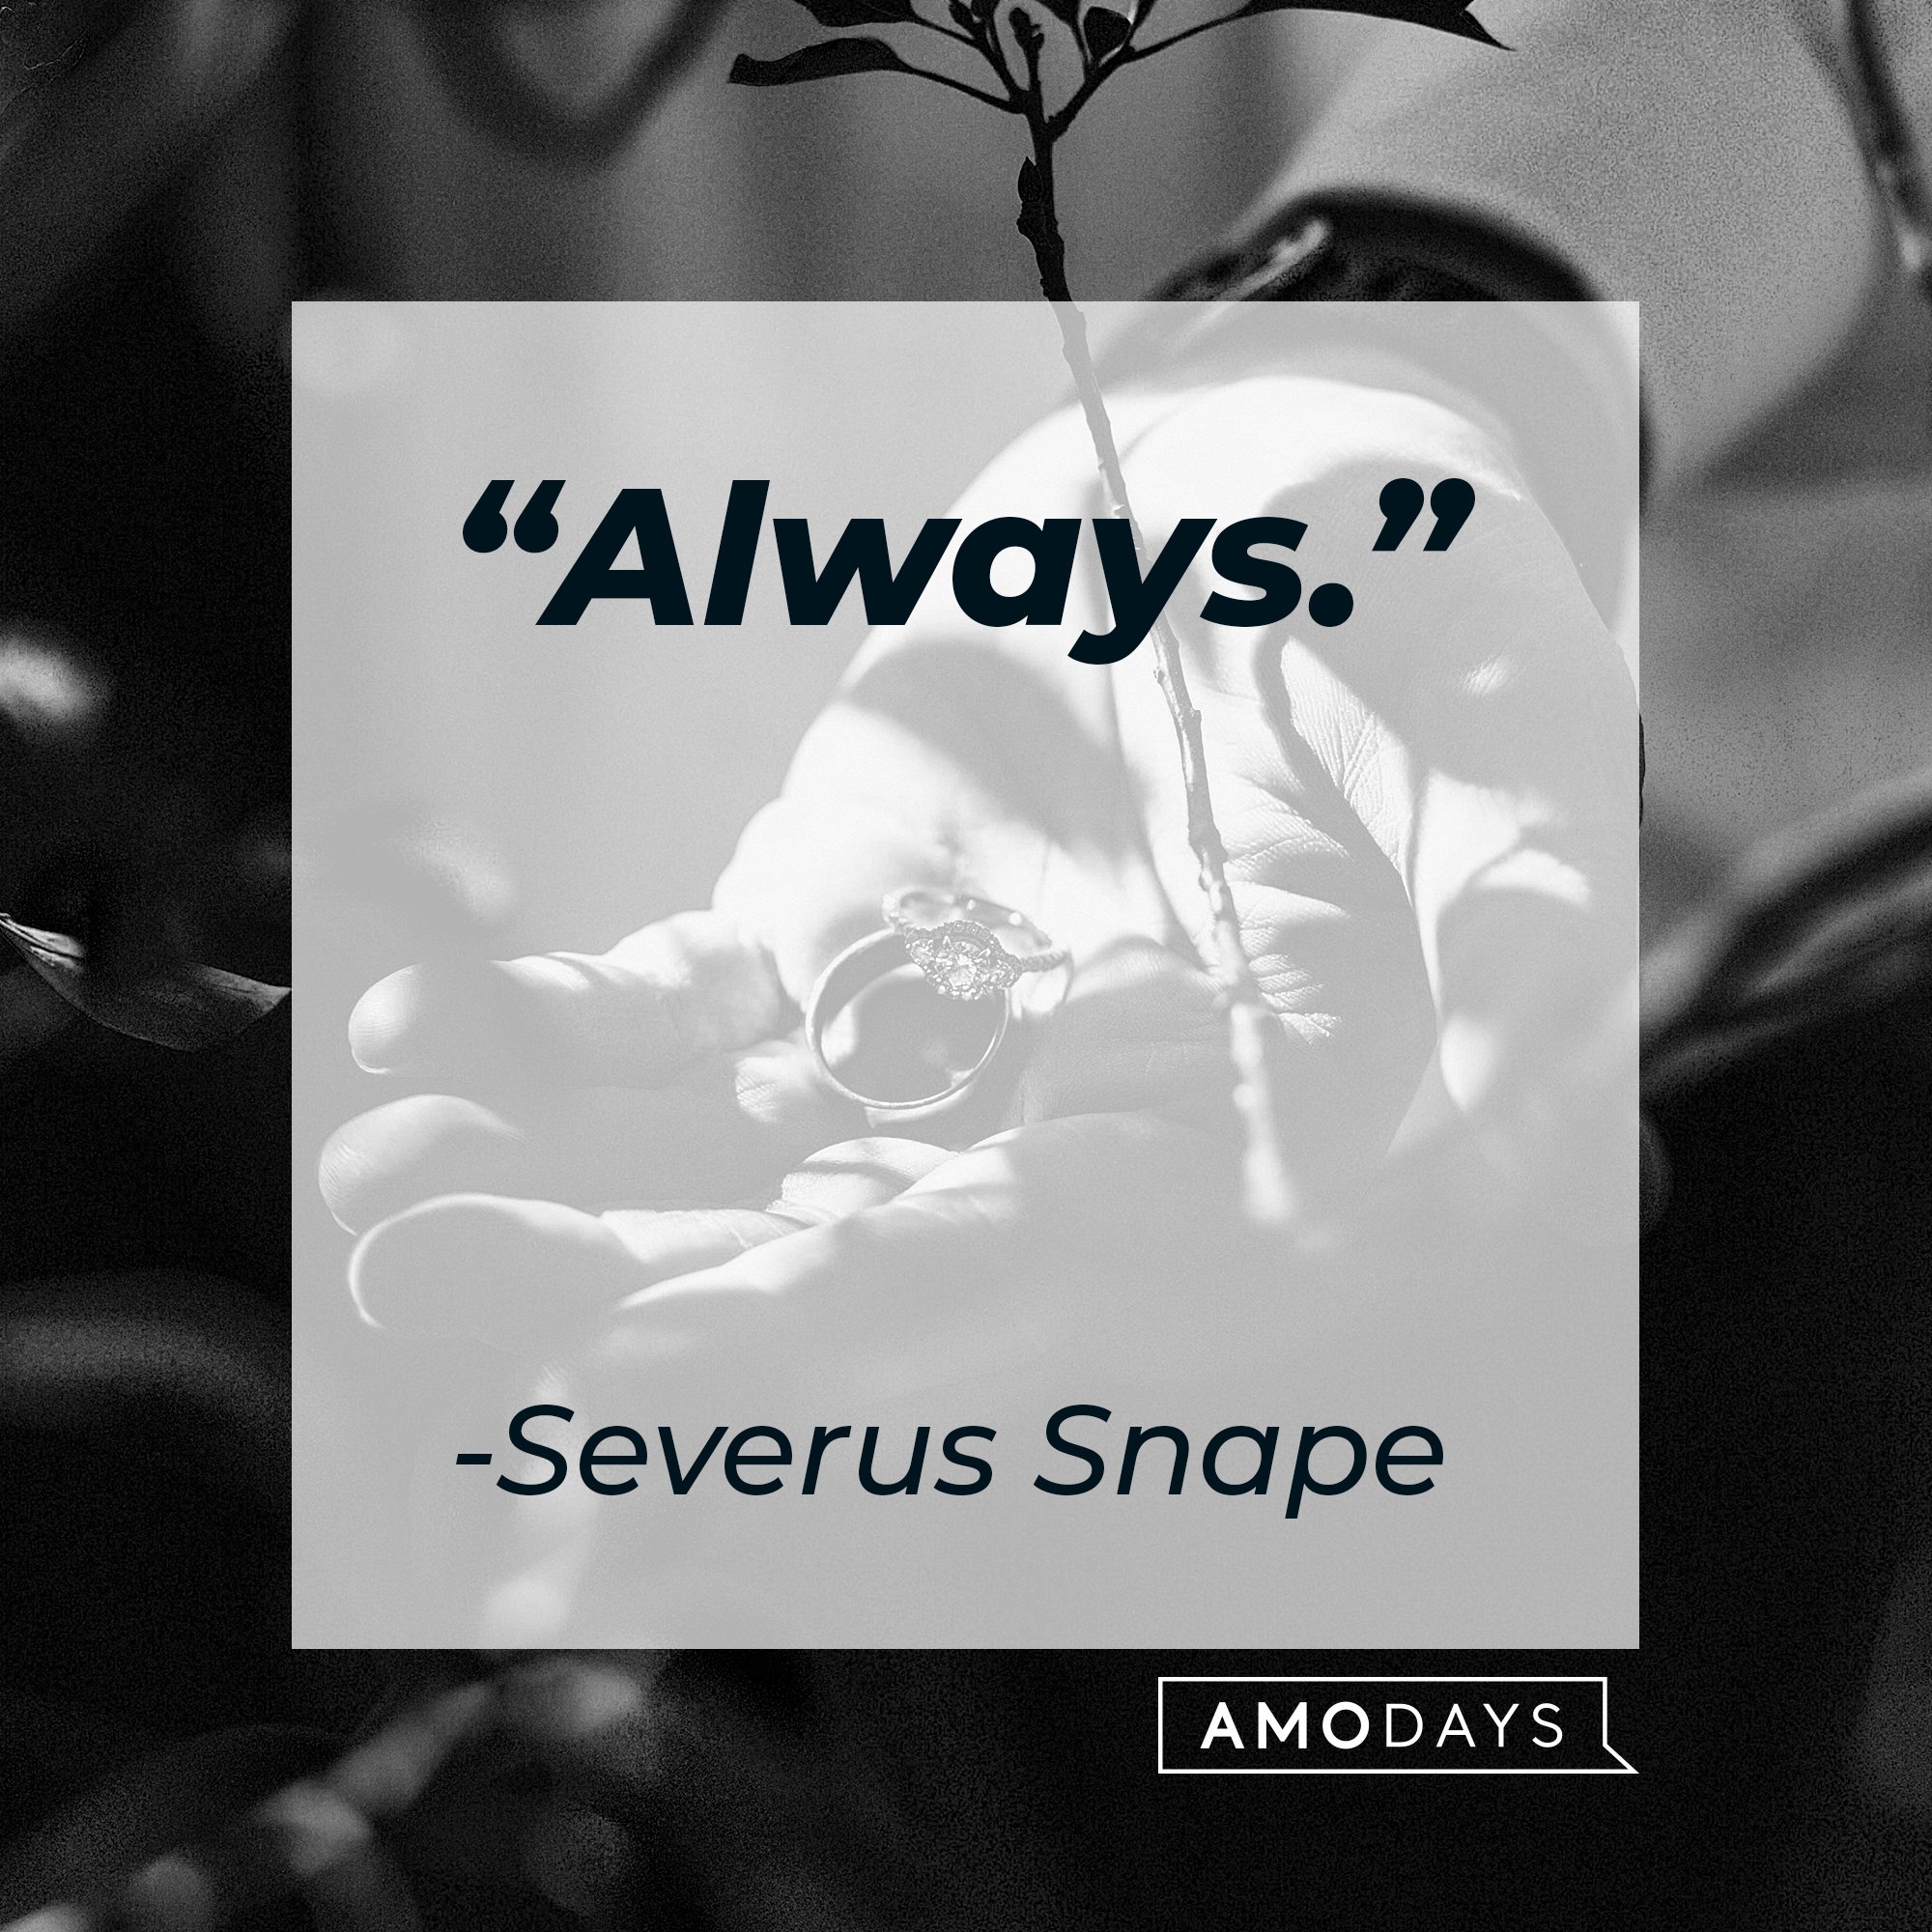 Severus Snape’s quote: “Always.” | Image: AmoDays